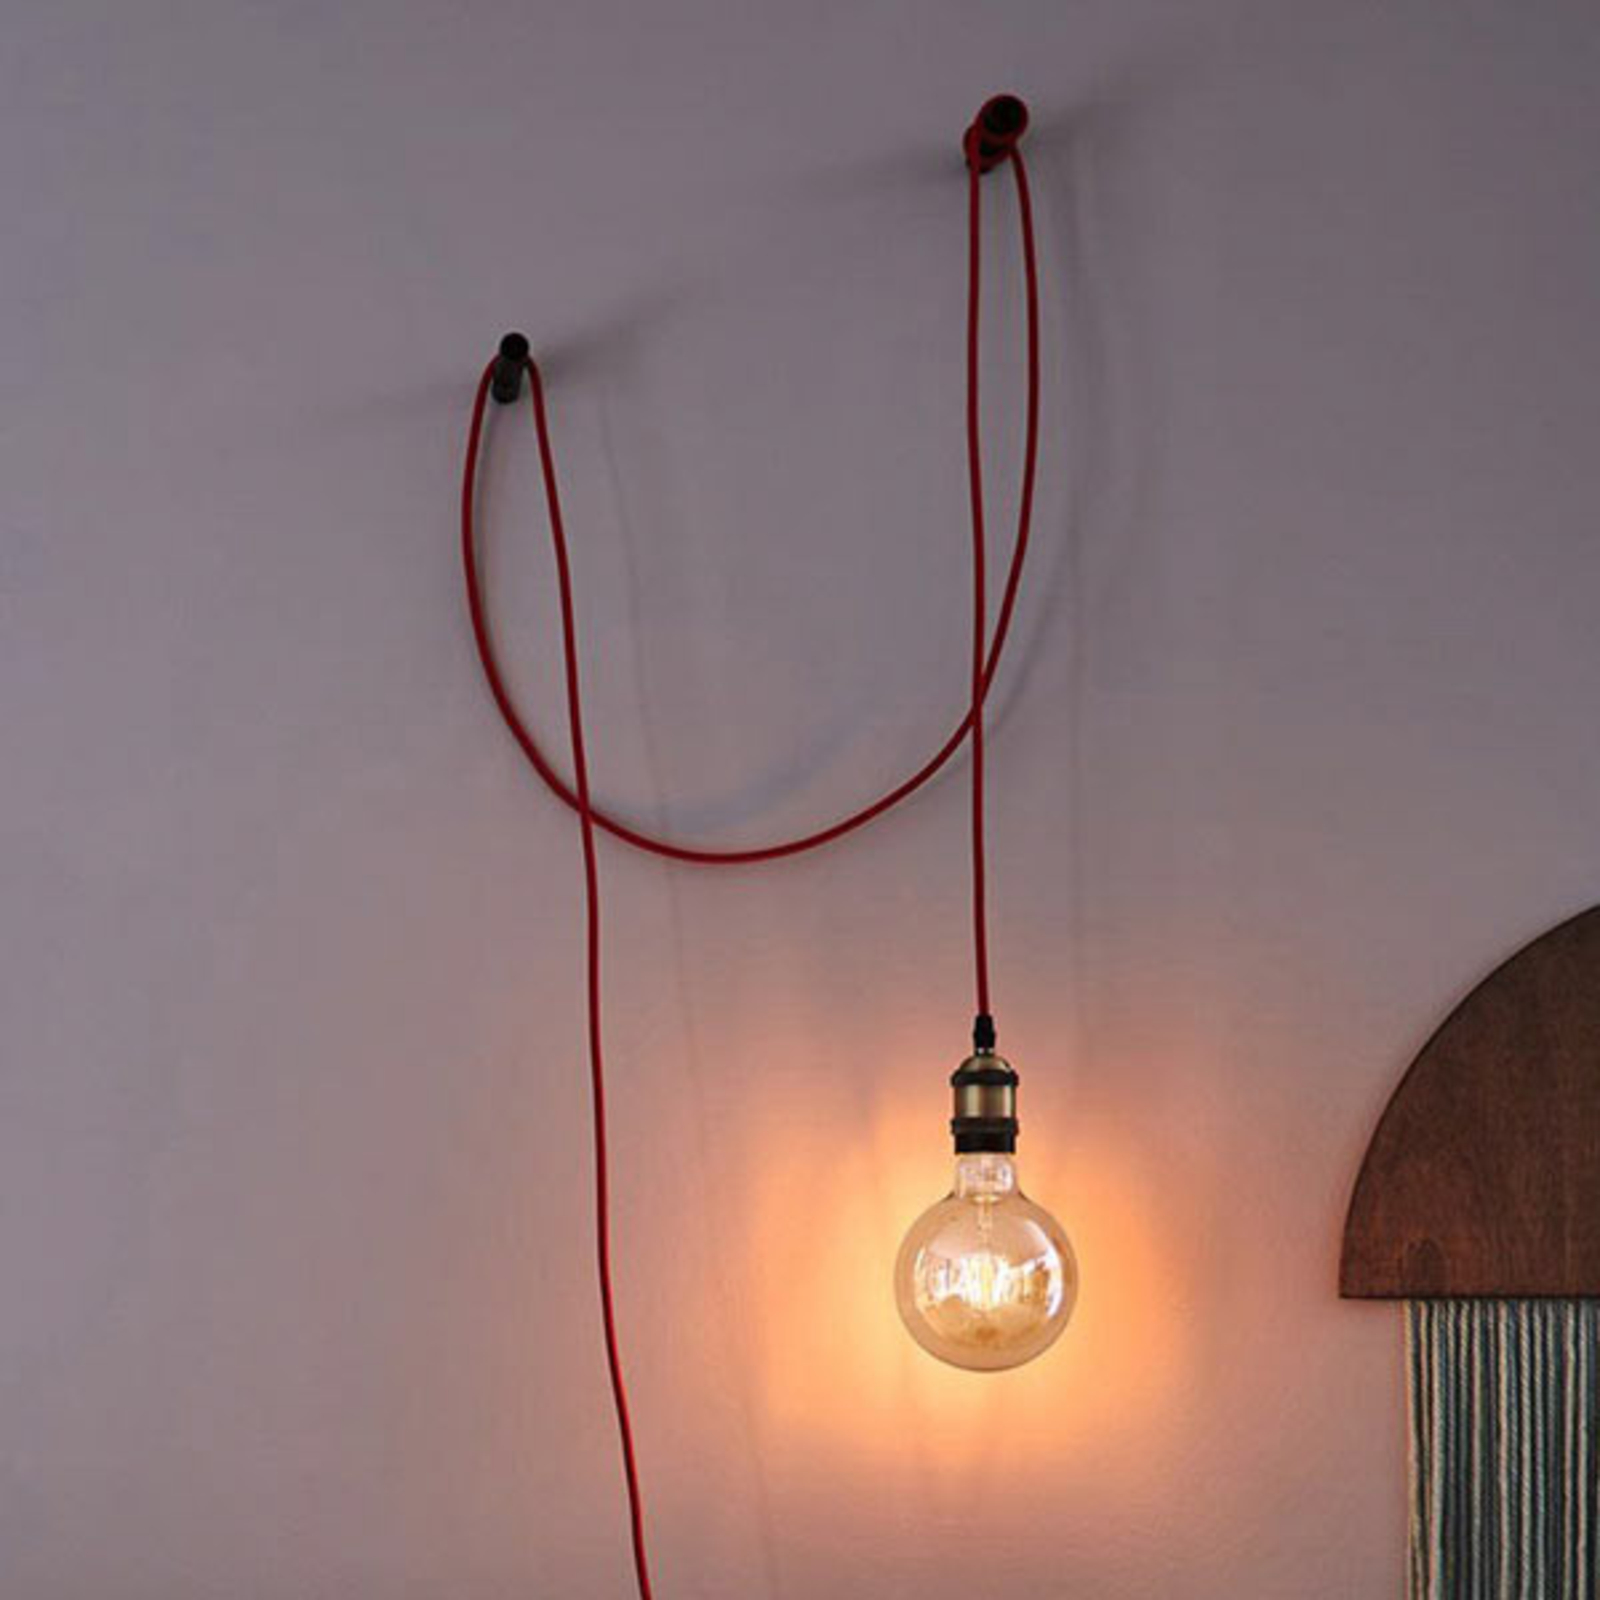 Paulmann hanglamp met stekker | Lampen24.be